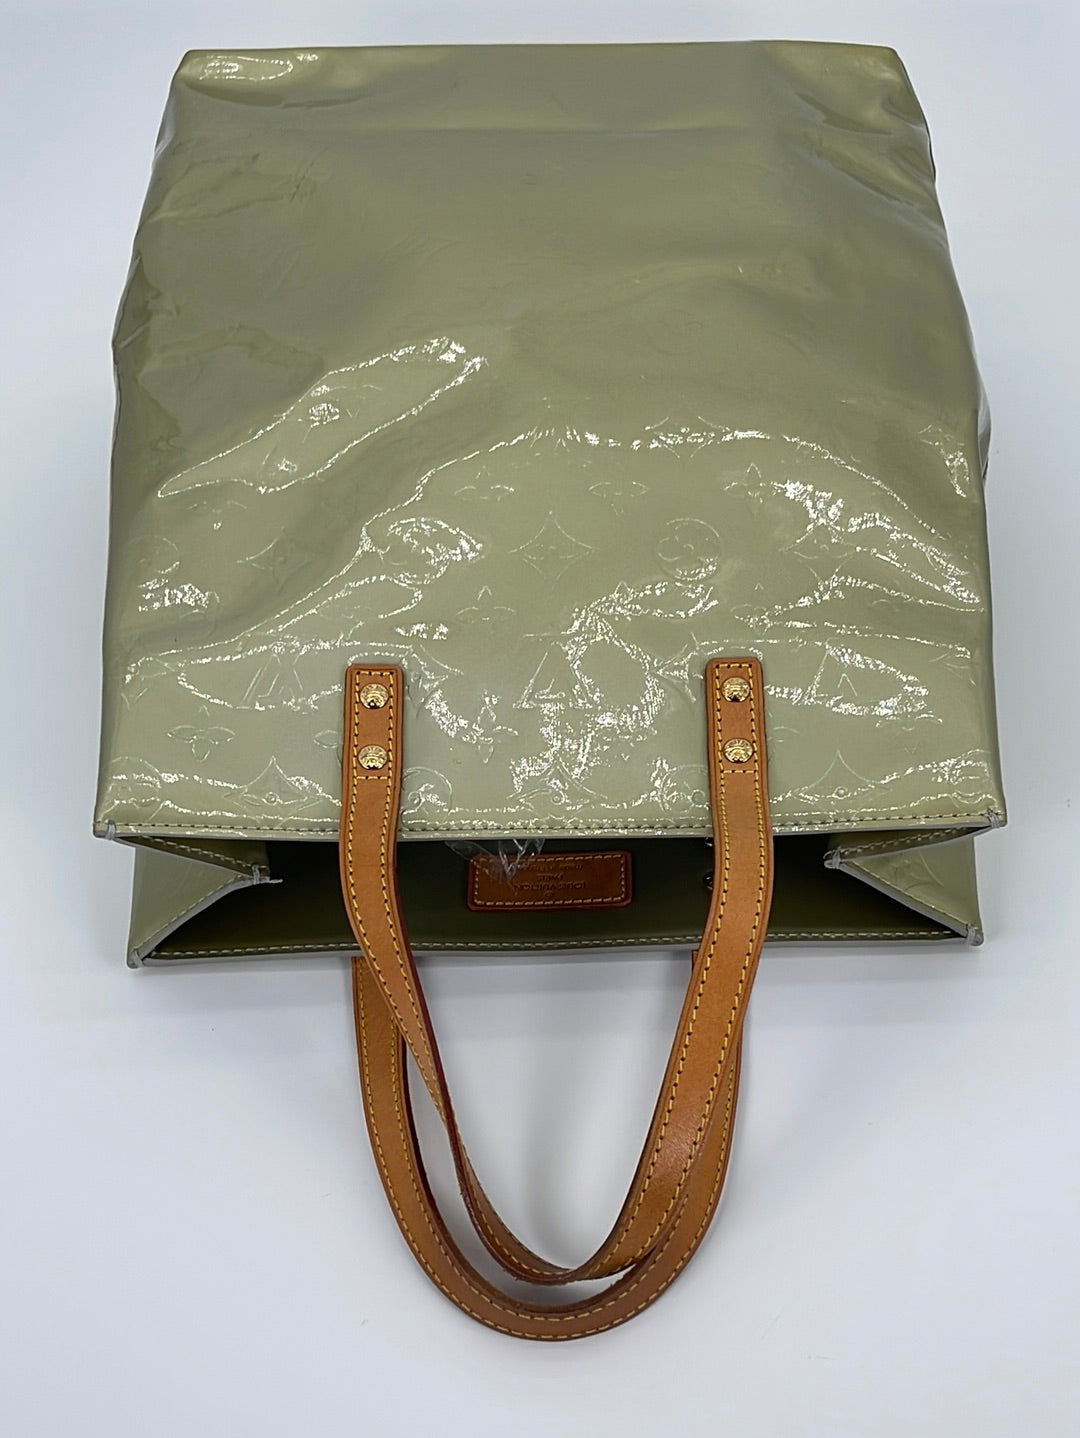 Vintage Louis Vuitton Light Green Monogram Vernis Reade MM Tote Bag TH0071 031023